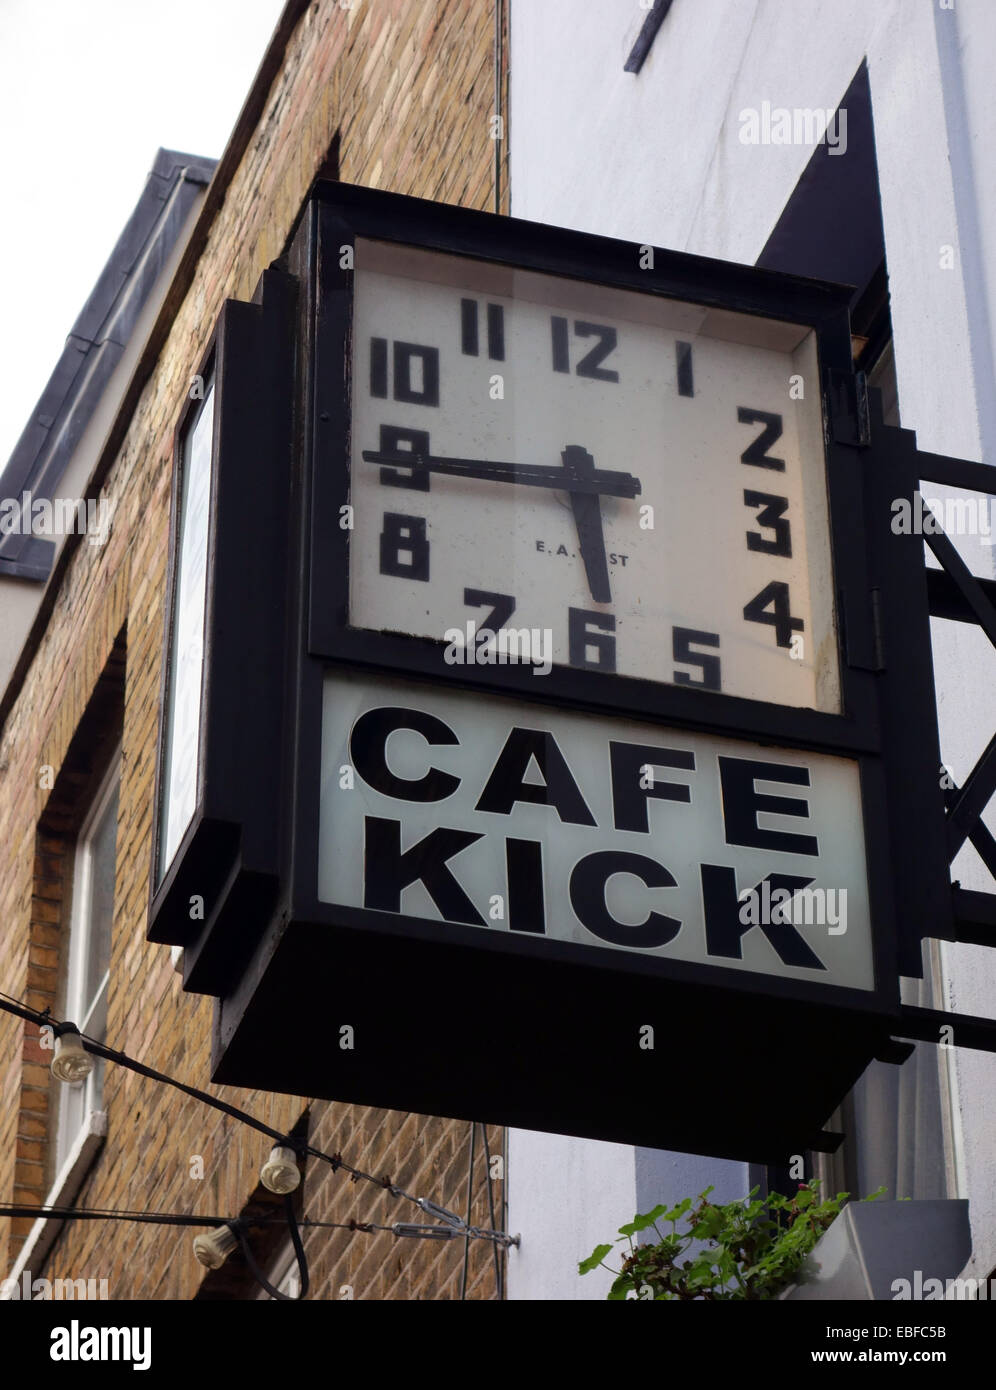 Cafe Kick table football cafe and bar, Clerkenwell, London Stock Photo